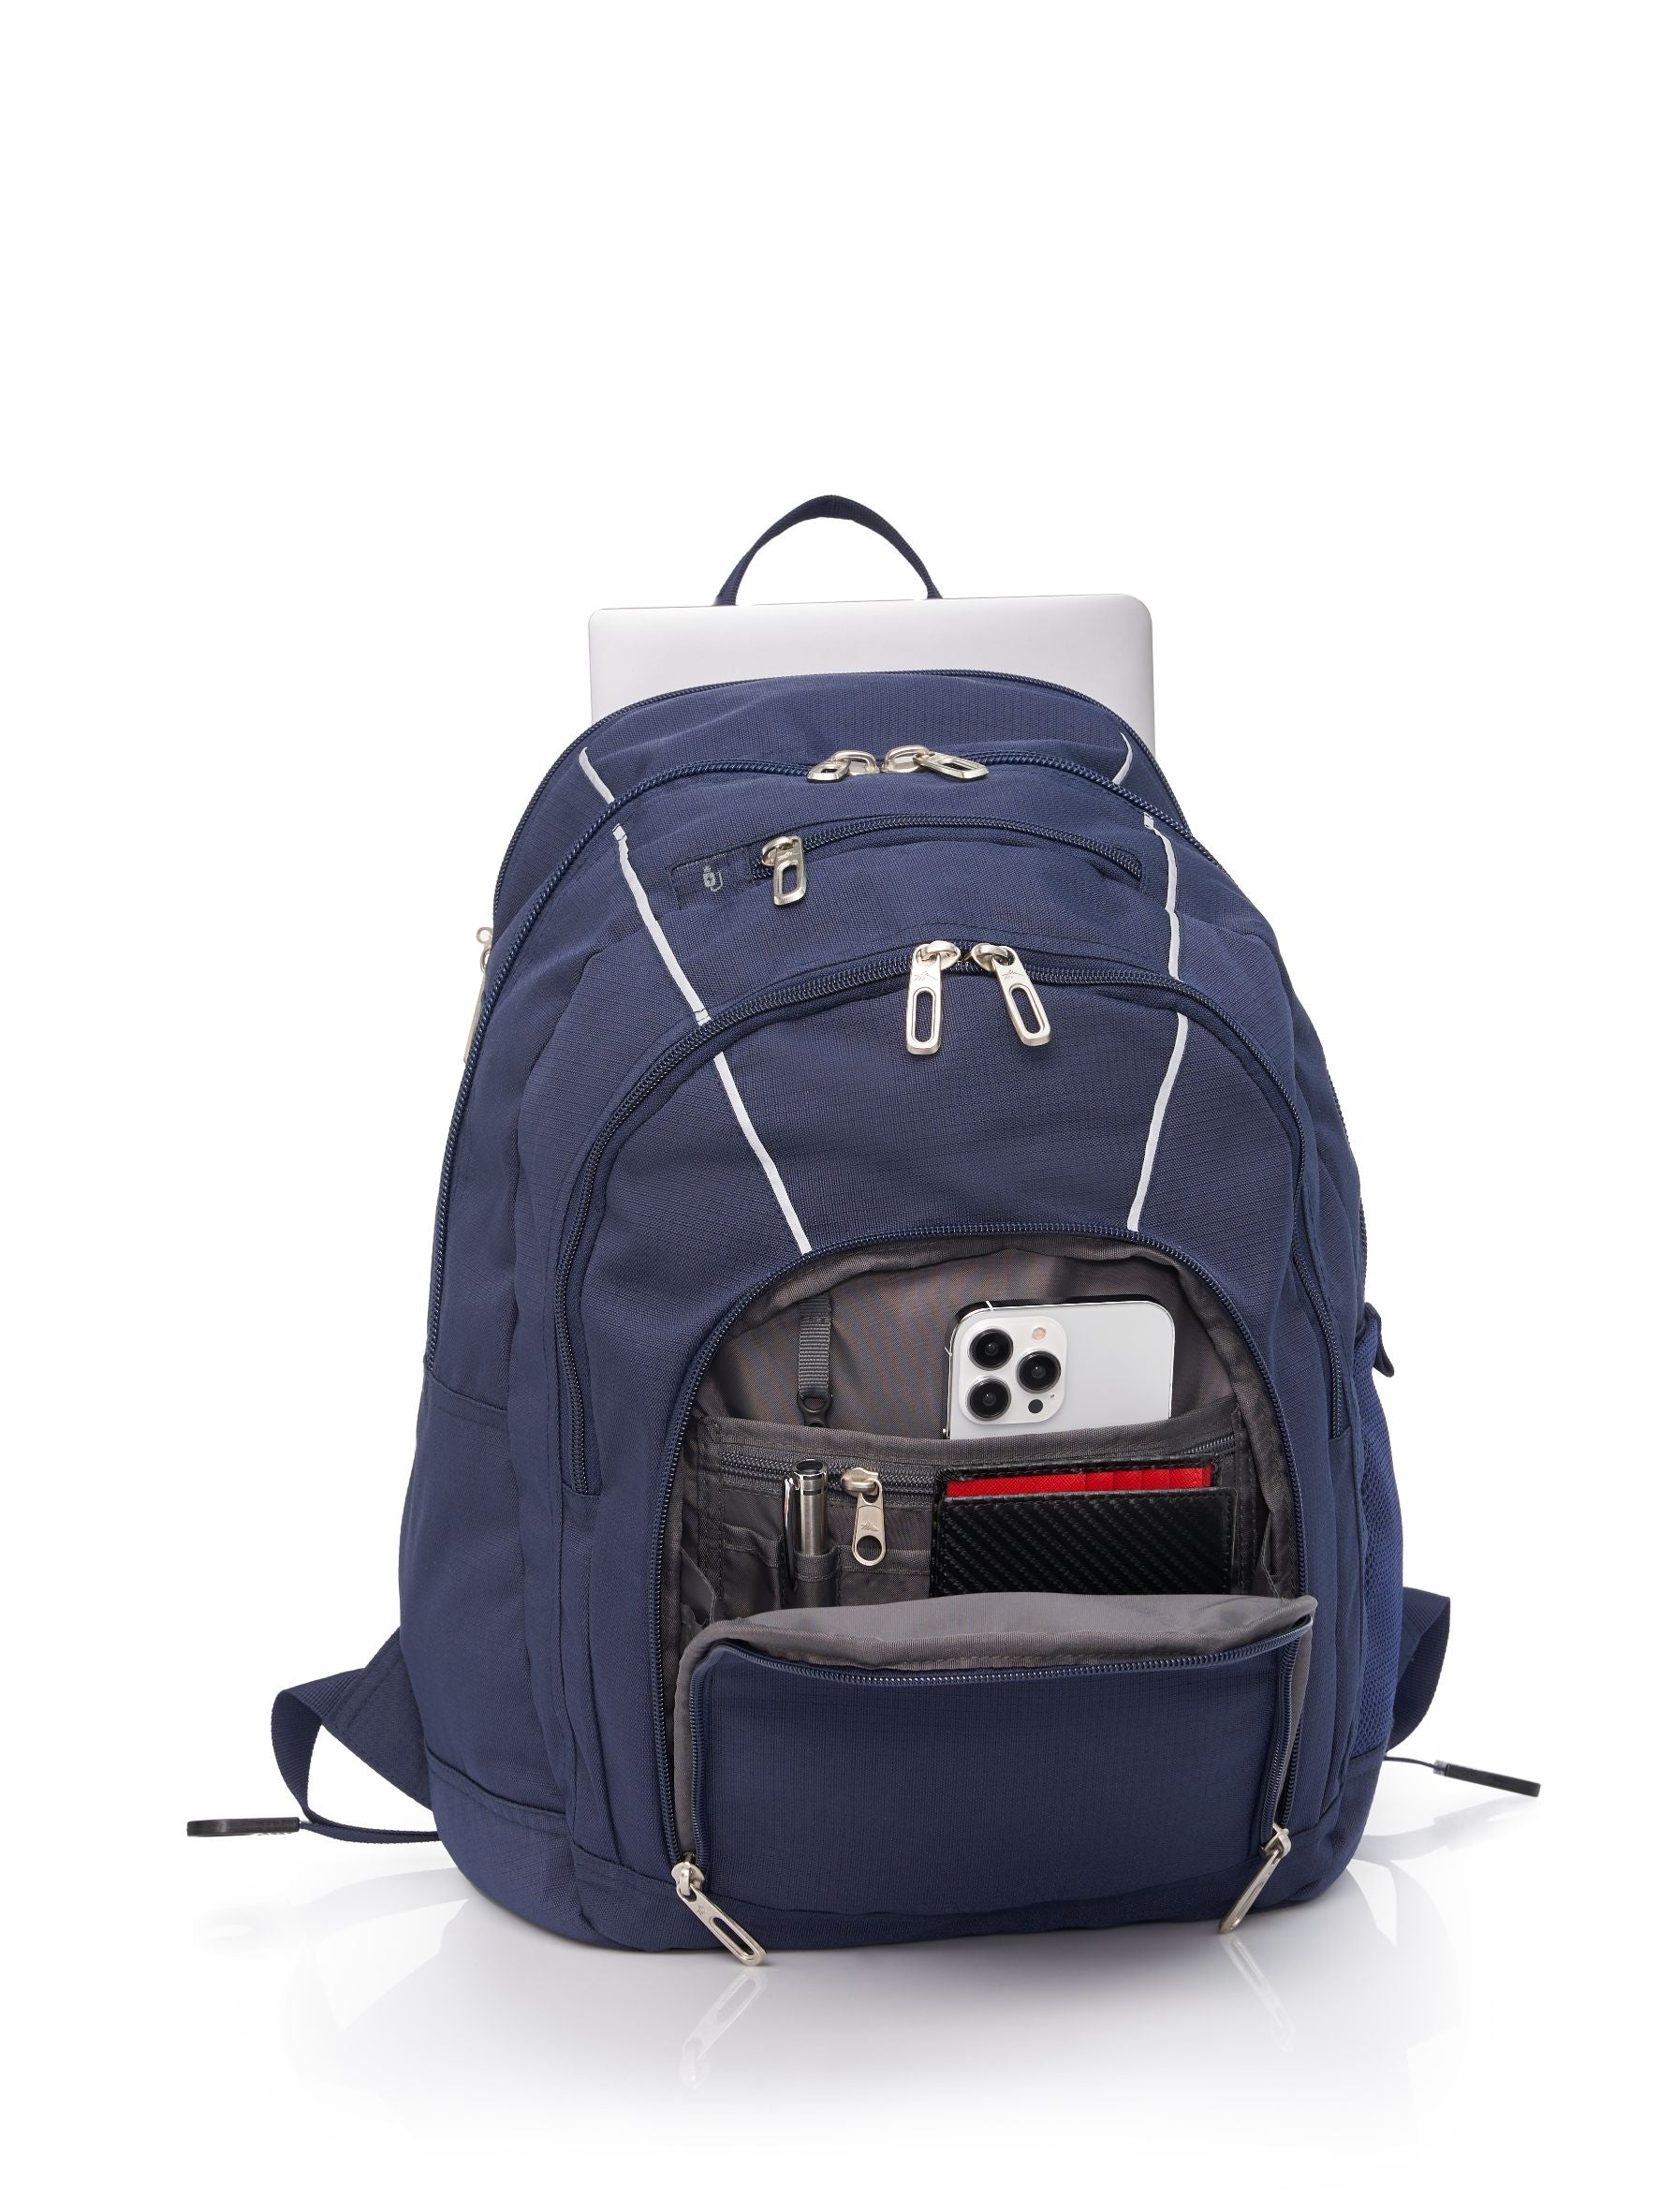 High Sierra - Academy 3.0 Backpack - Marine Blue-6